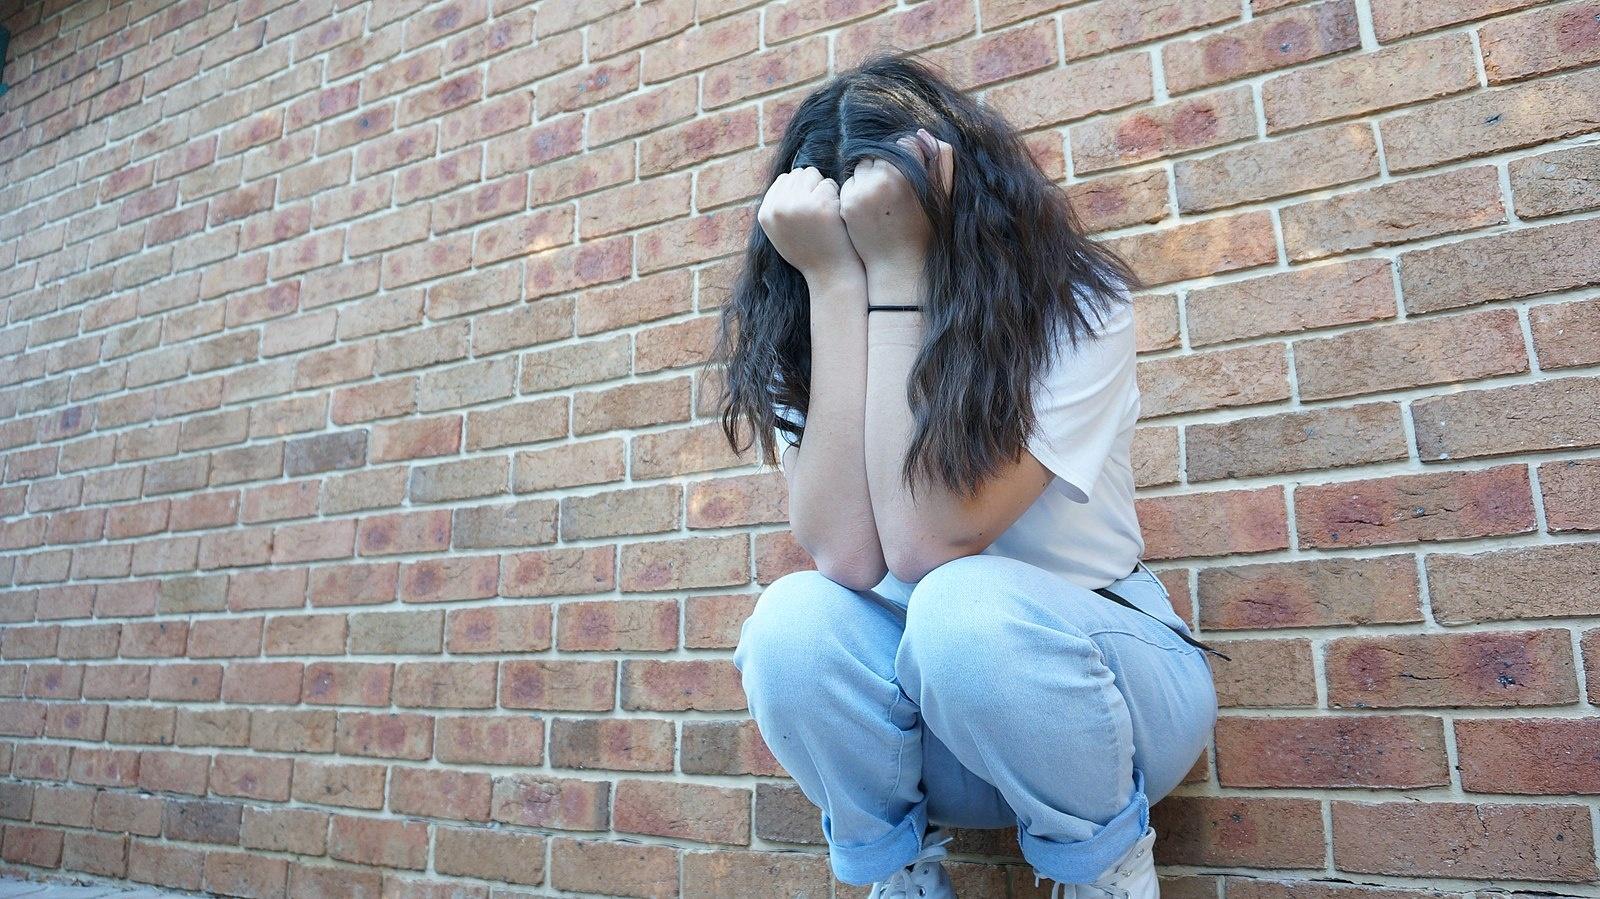 Depressed_girl_by_brick_wall.jpeg